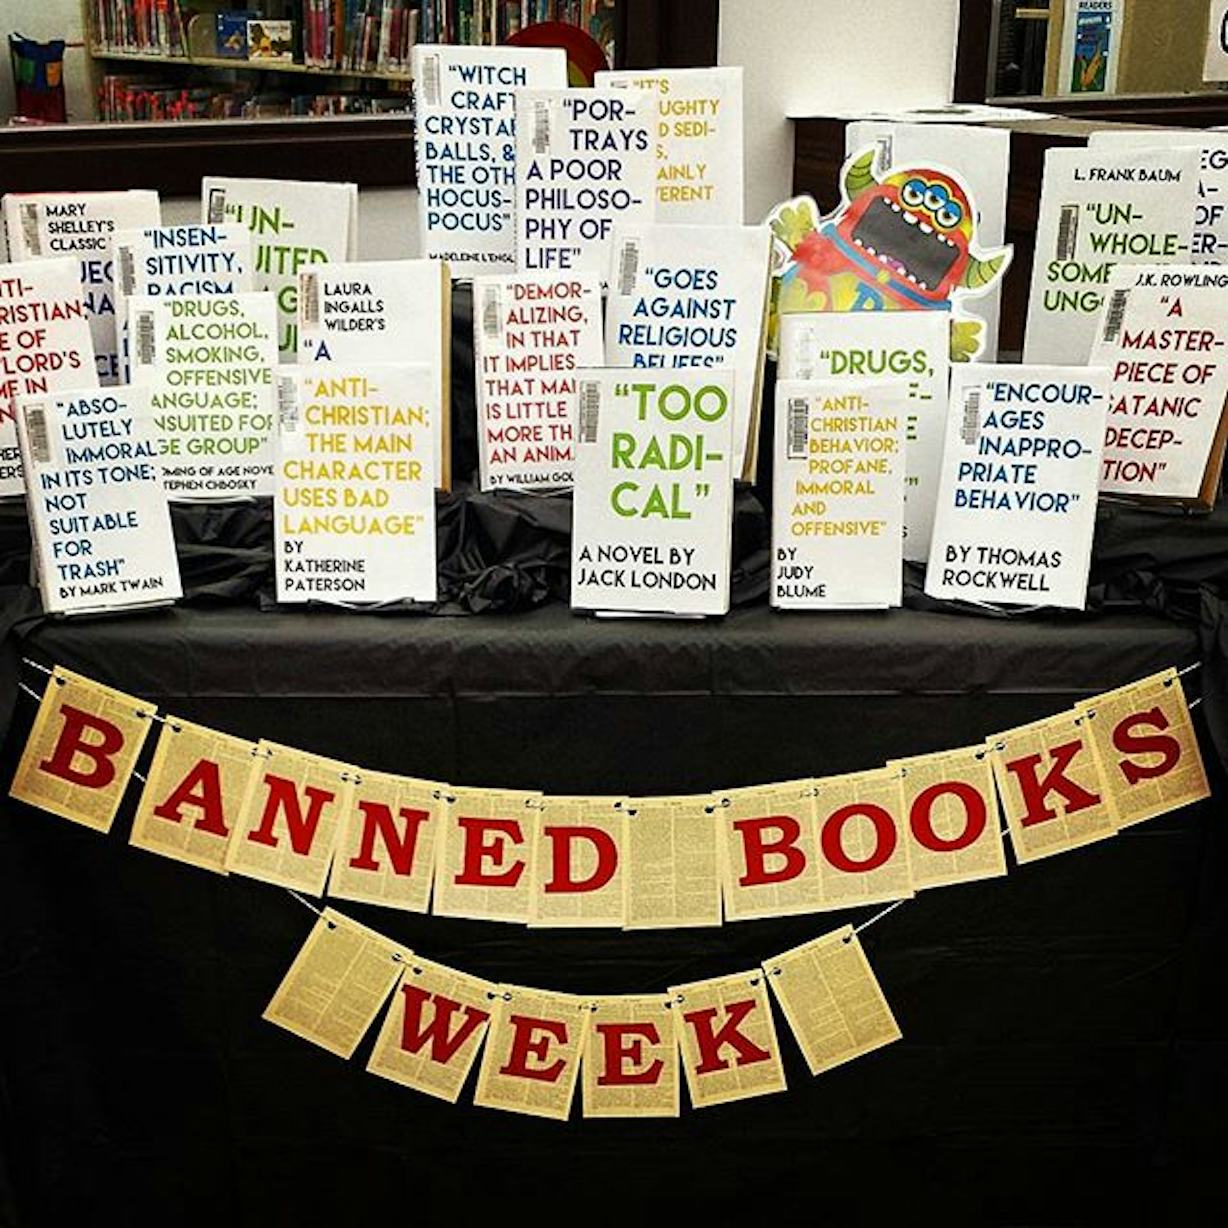 6 Ways To Celebrate Banned Books Week